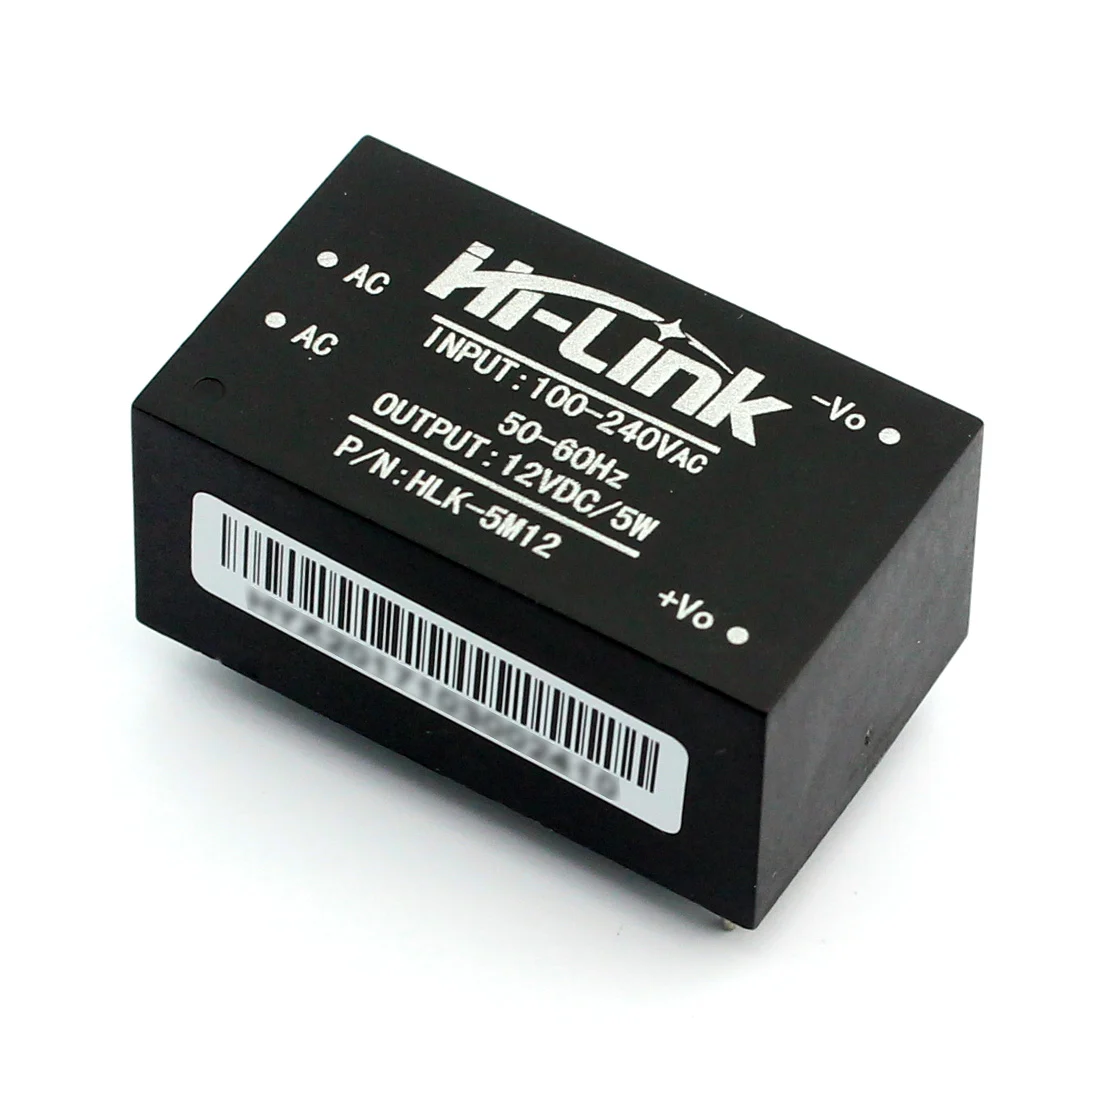 Hi-link HLK-5M12 100-240V to 12V 5W 416mA AC to DC Power Supply Module Isolated Converter